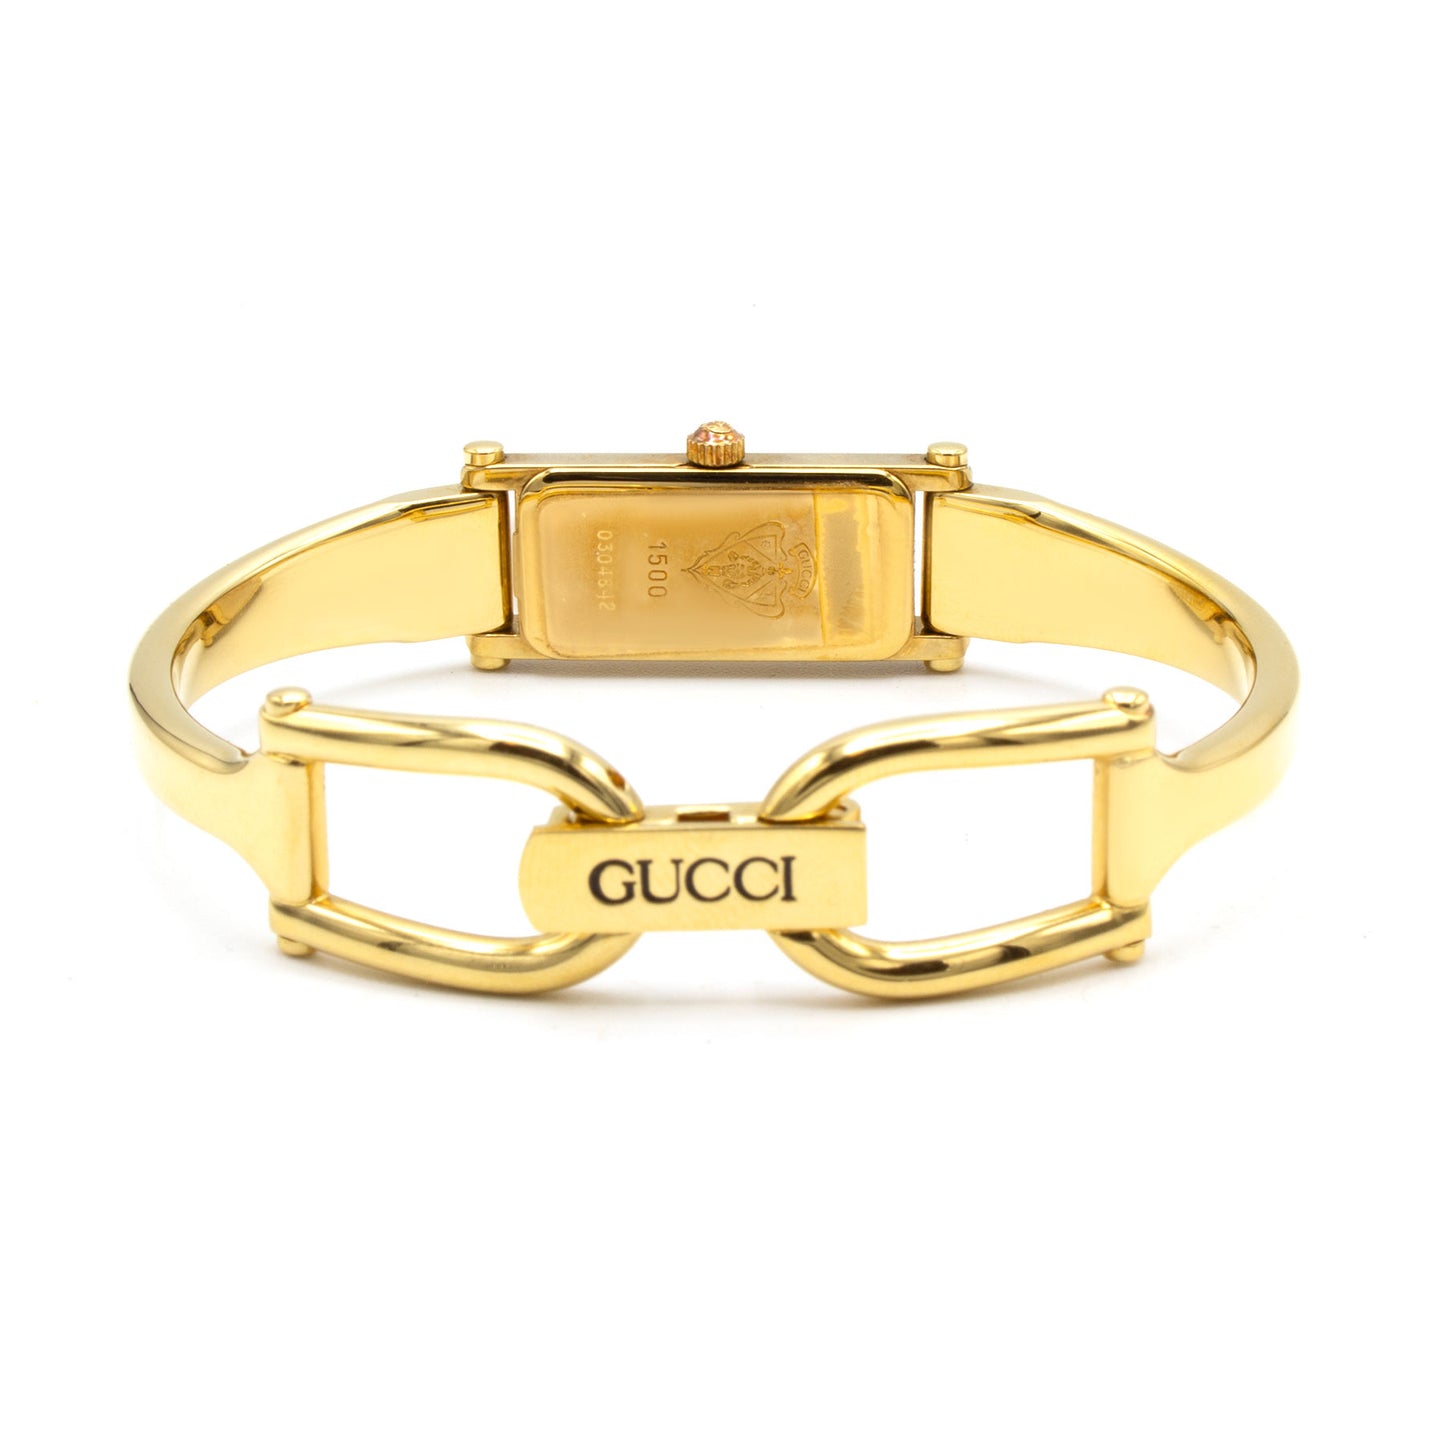 Gucci 1500 watch